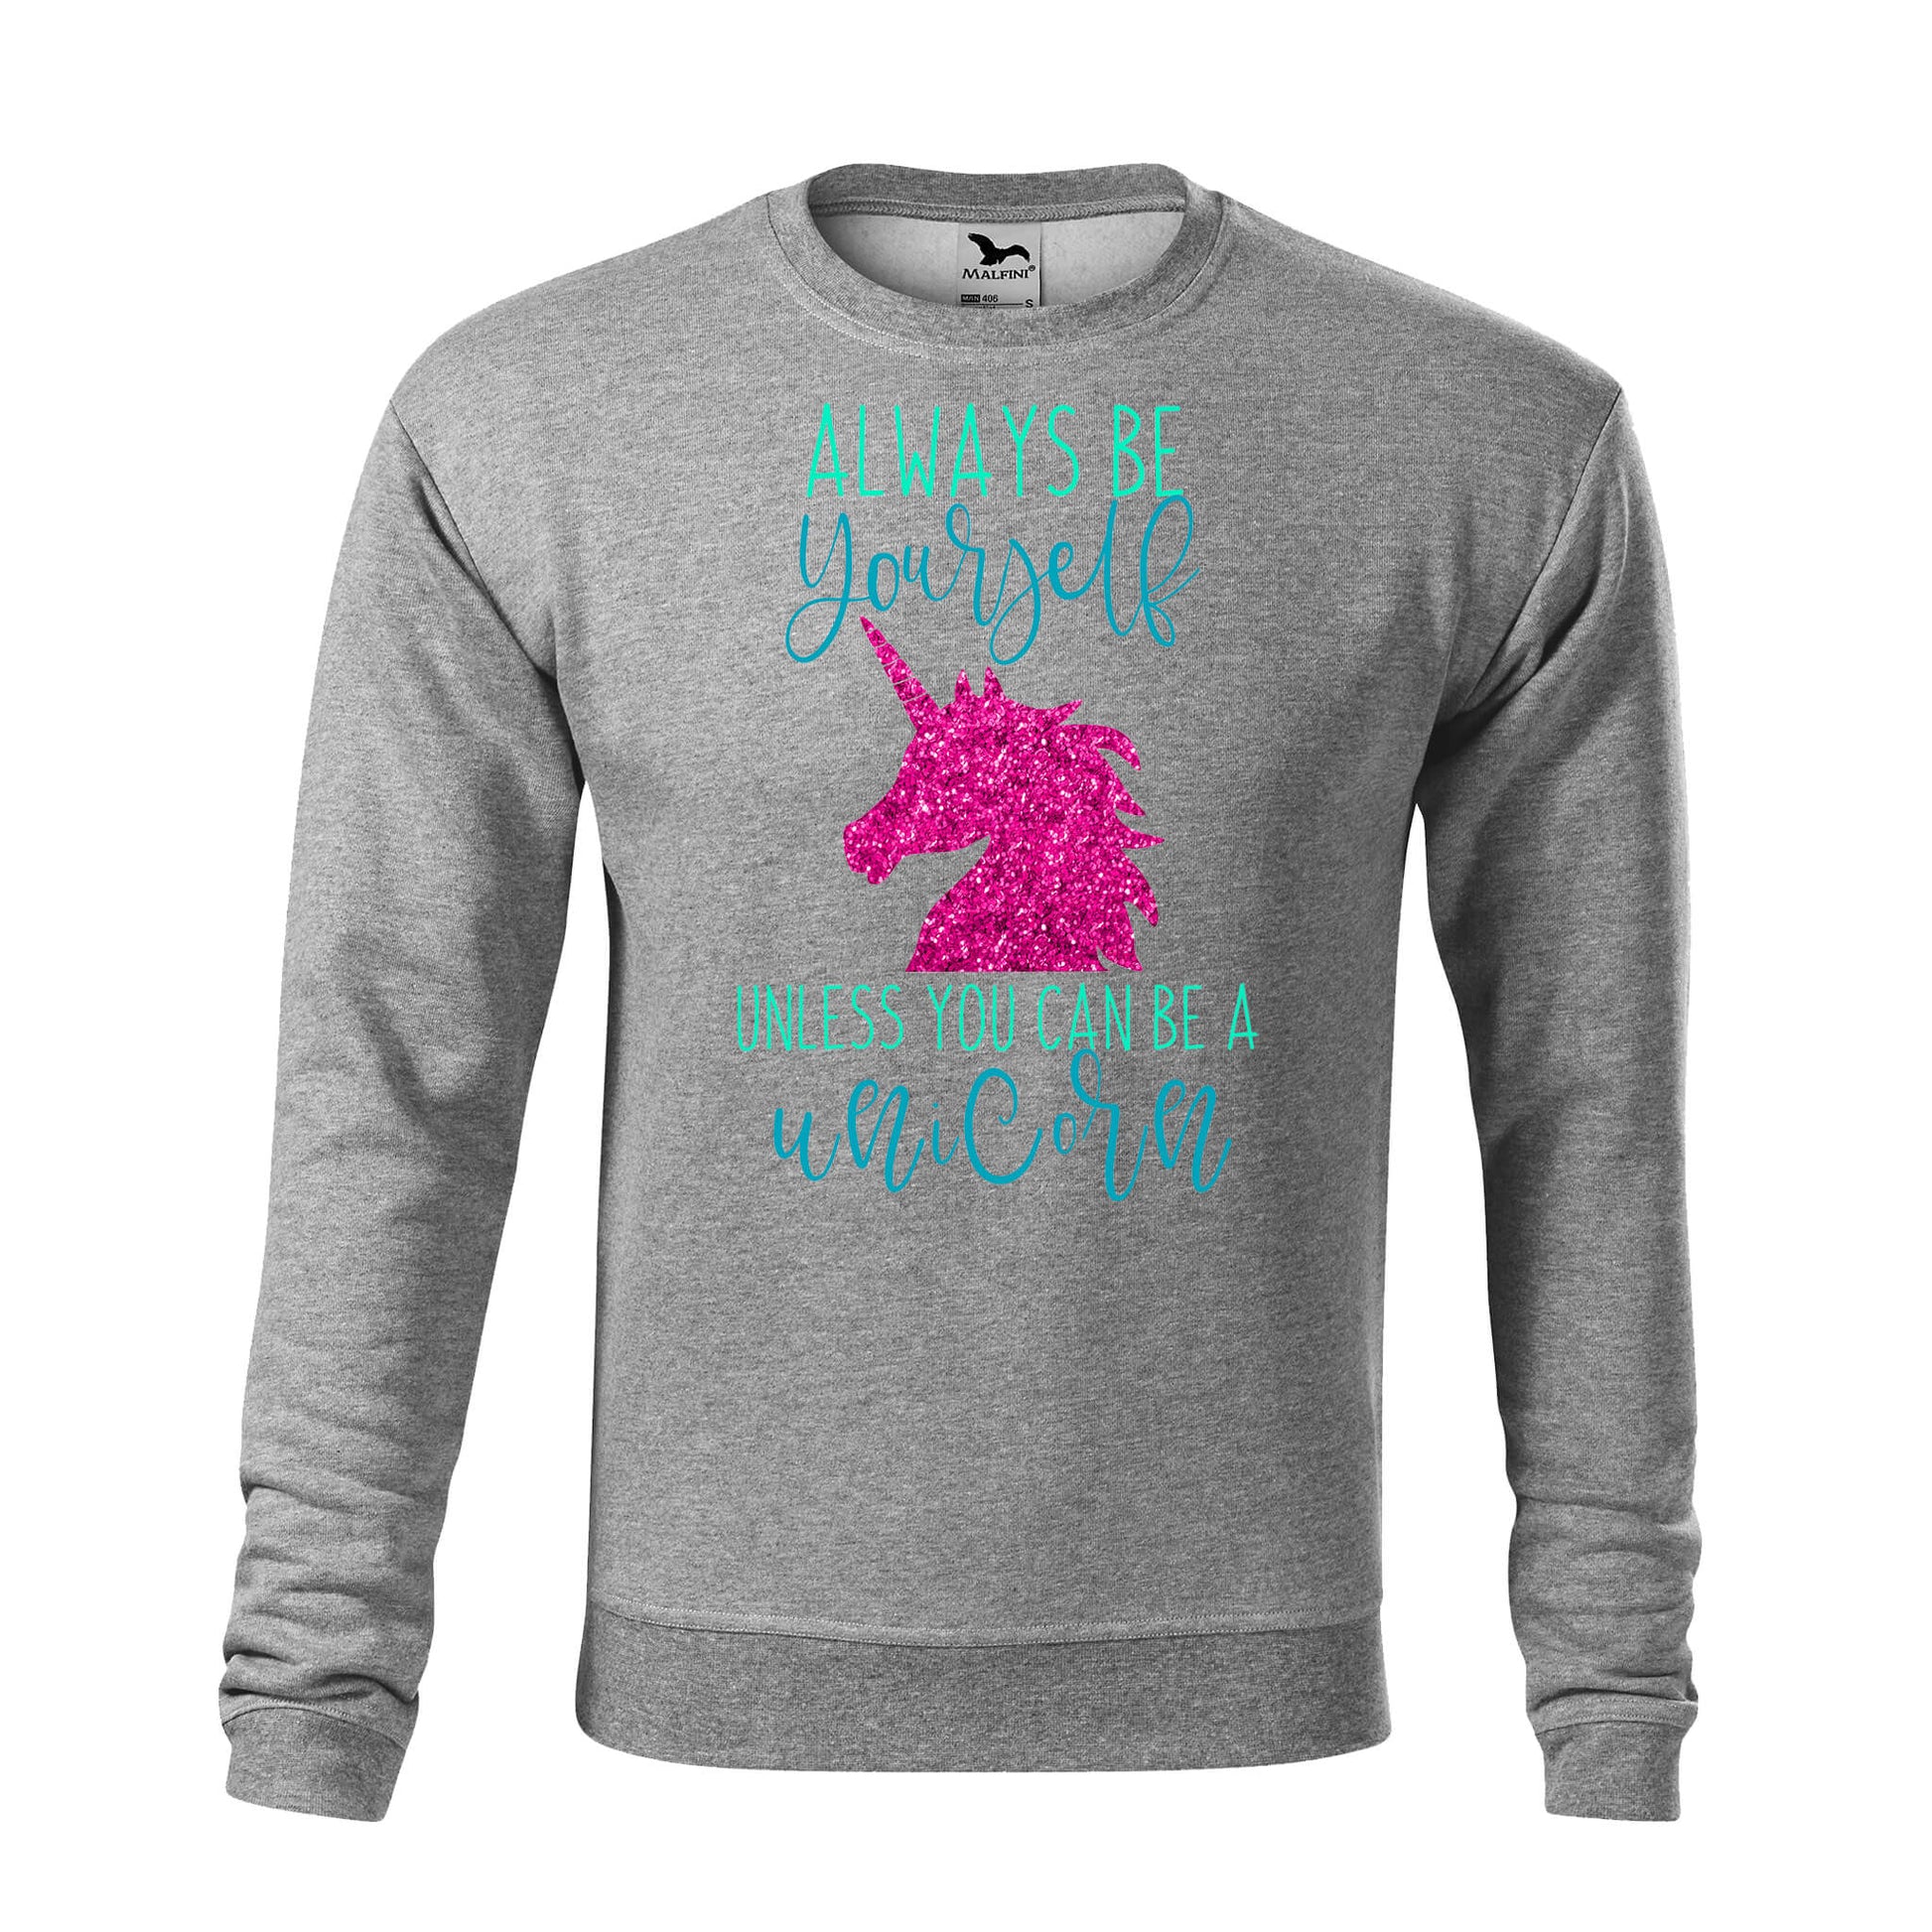 Always be an unicorn sweatshirt - rvdesignprint